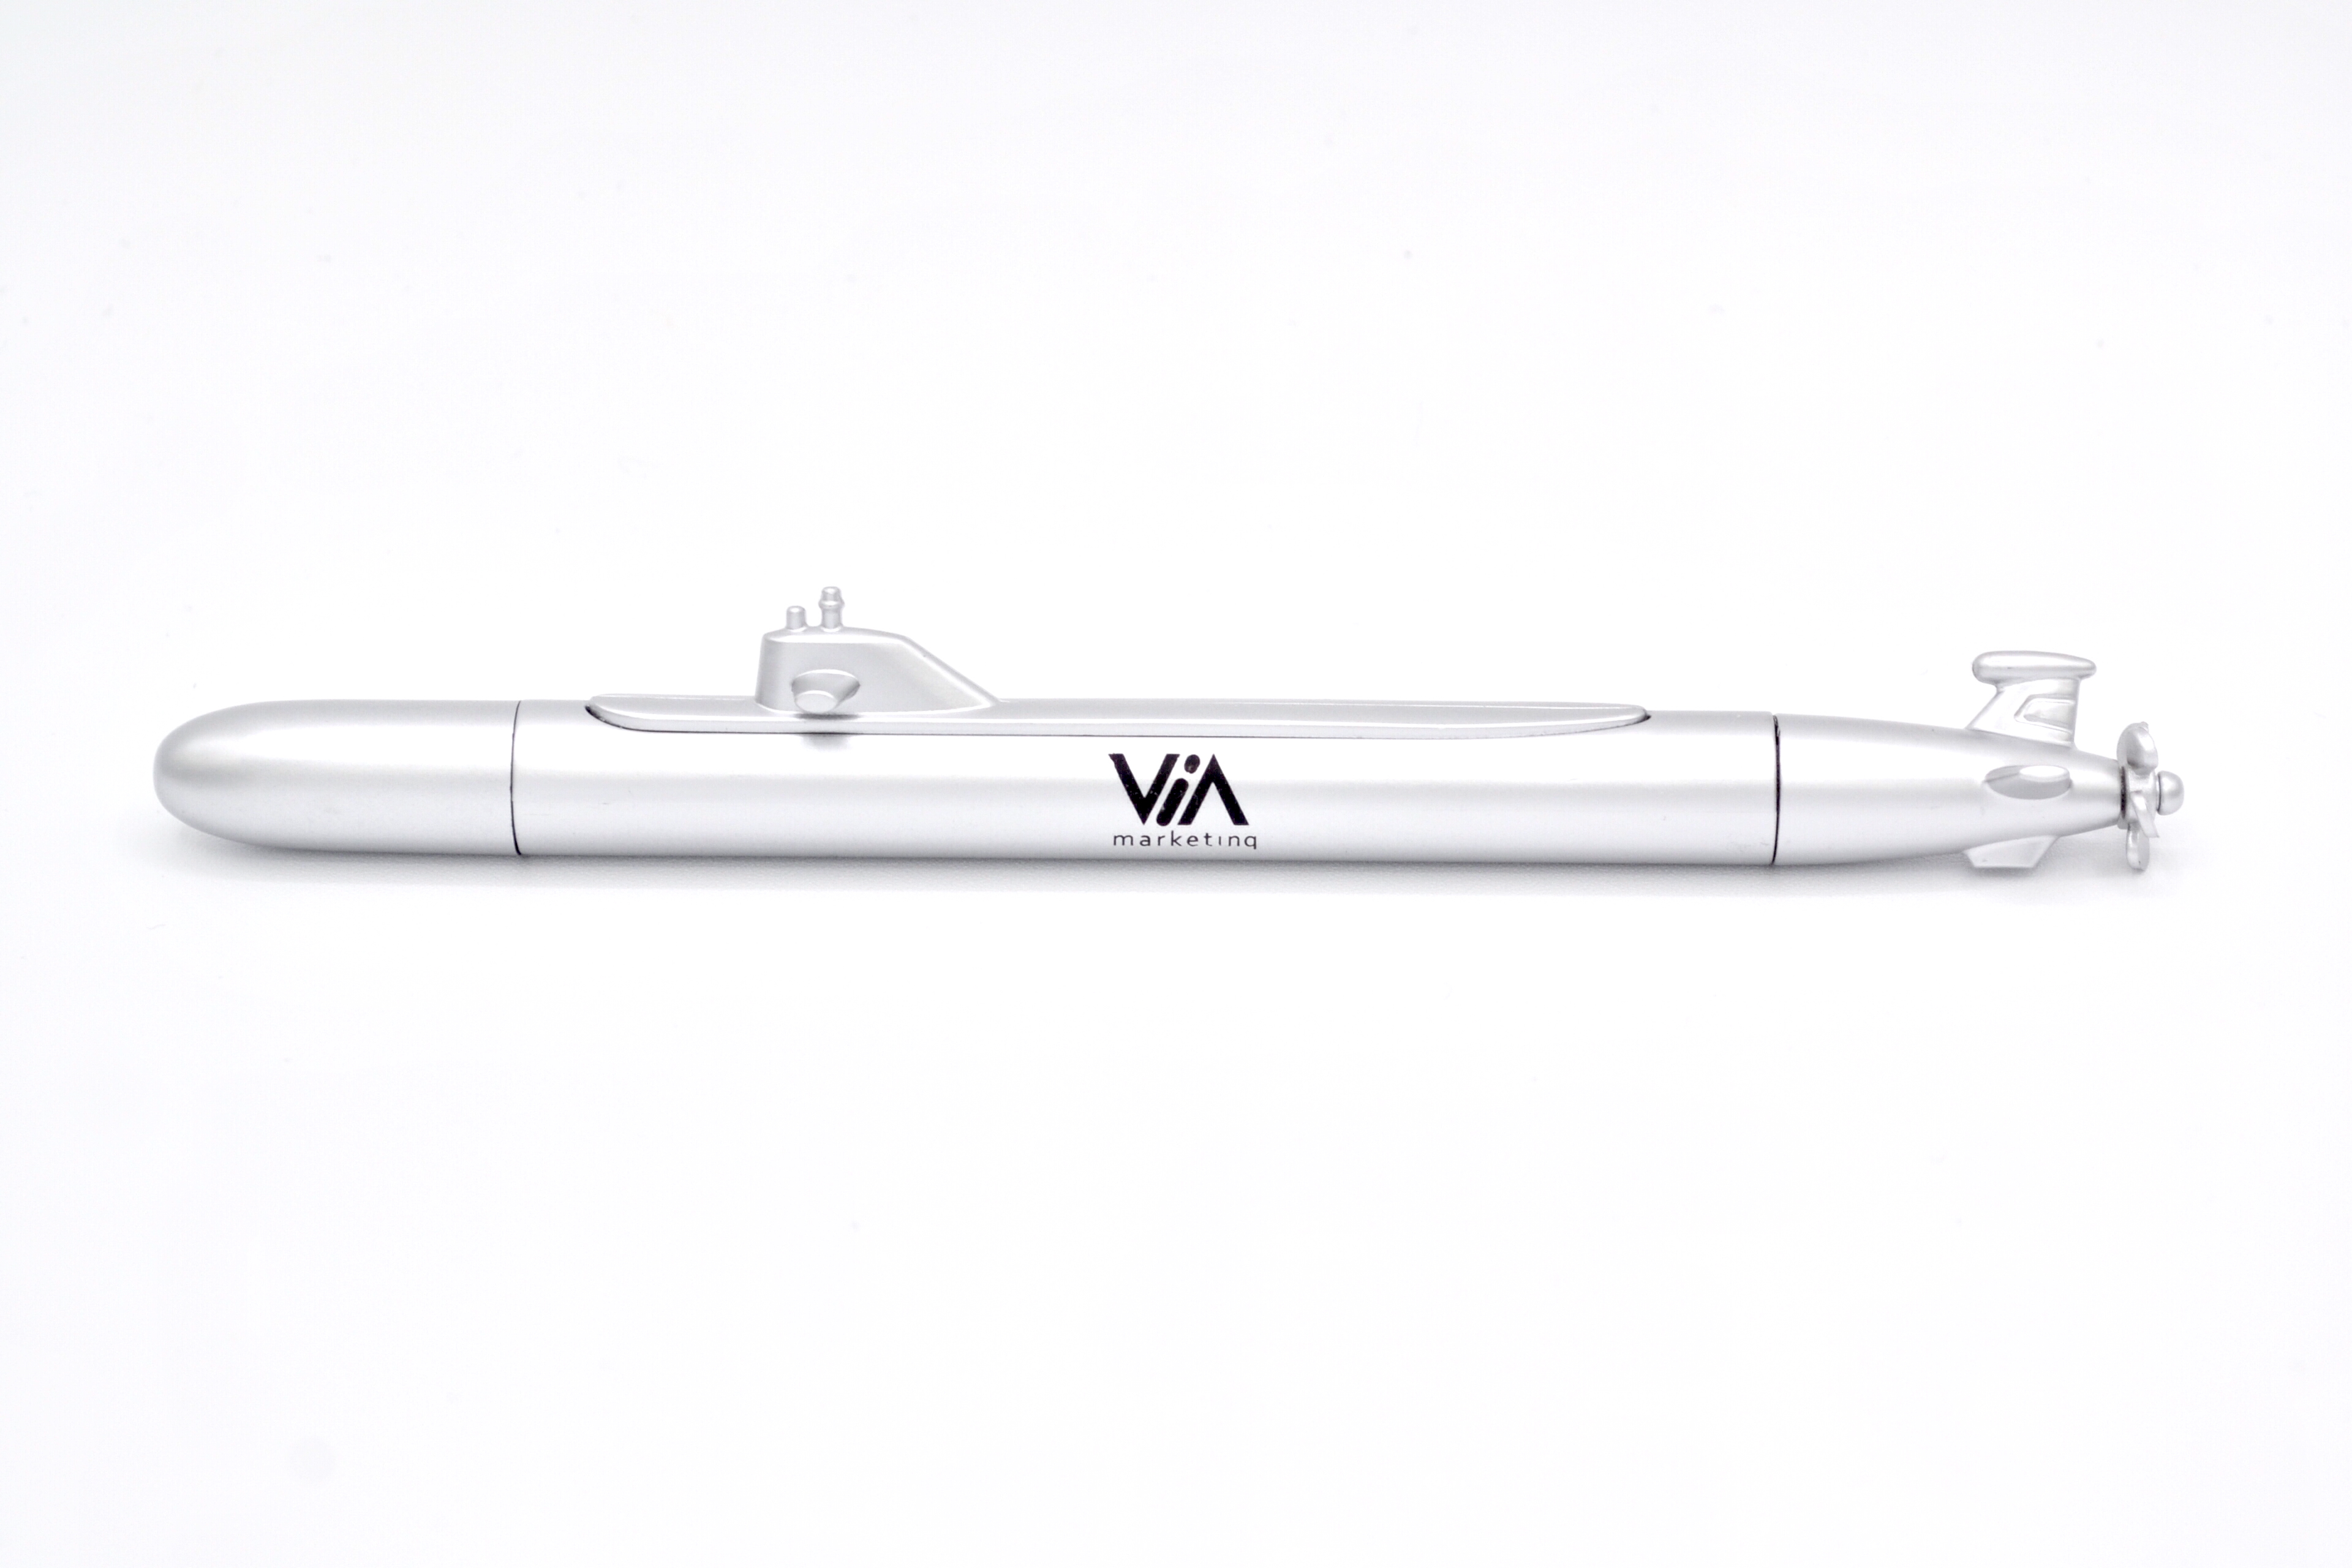  VIA Marketing 35th Anniversary Pen